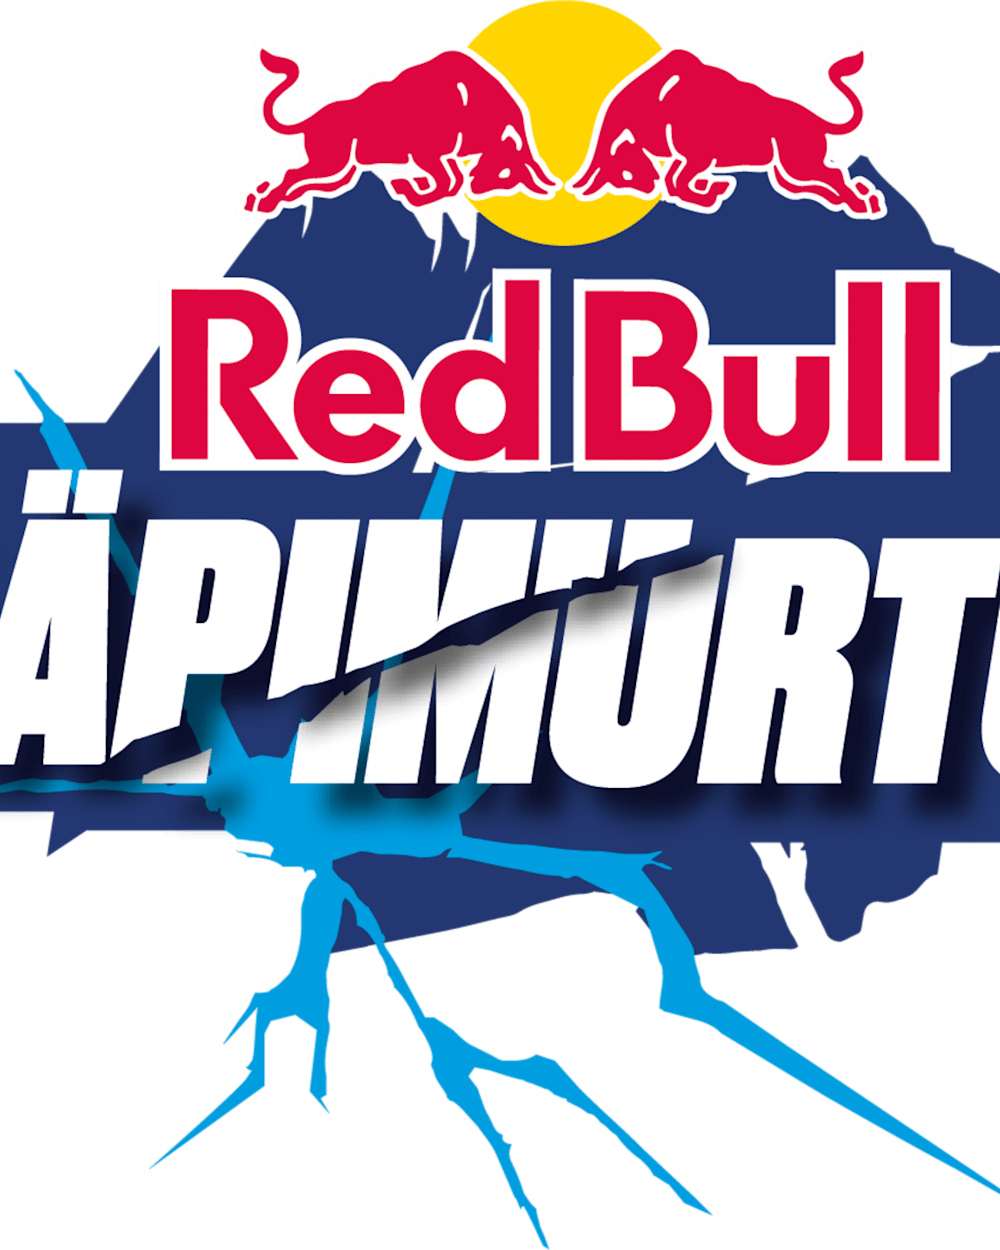 Red Bull Finland